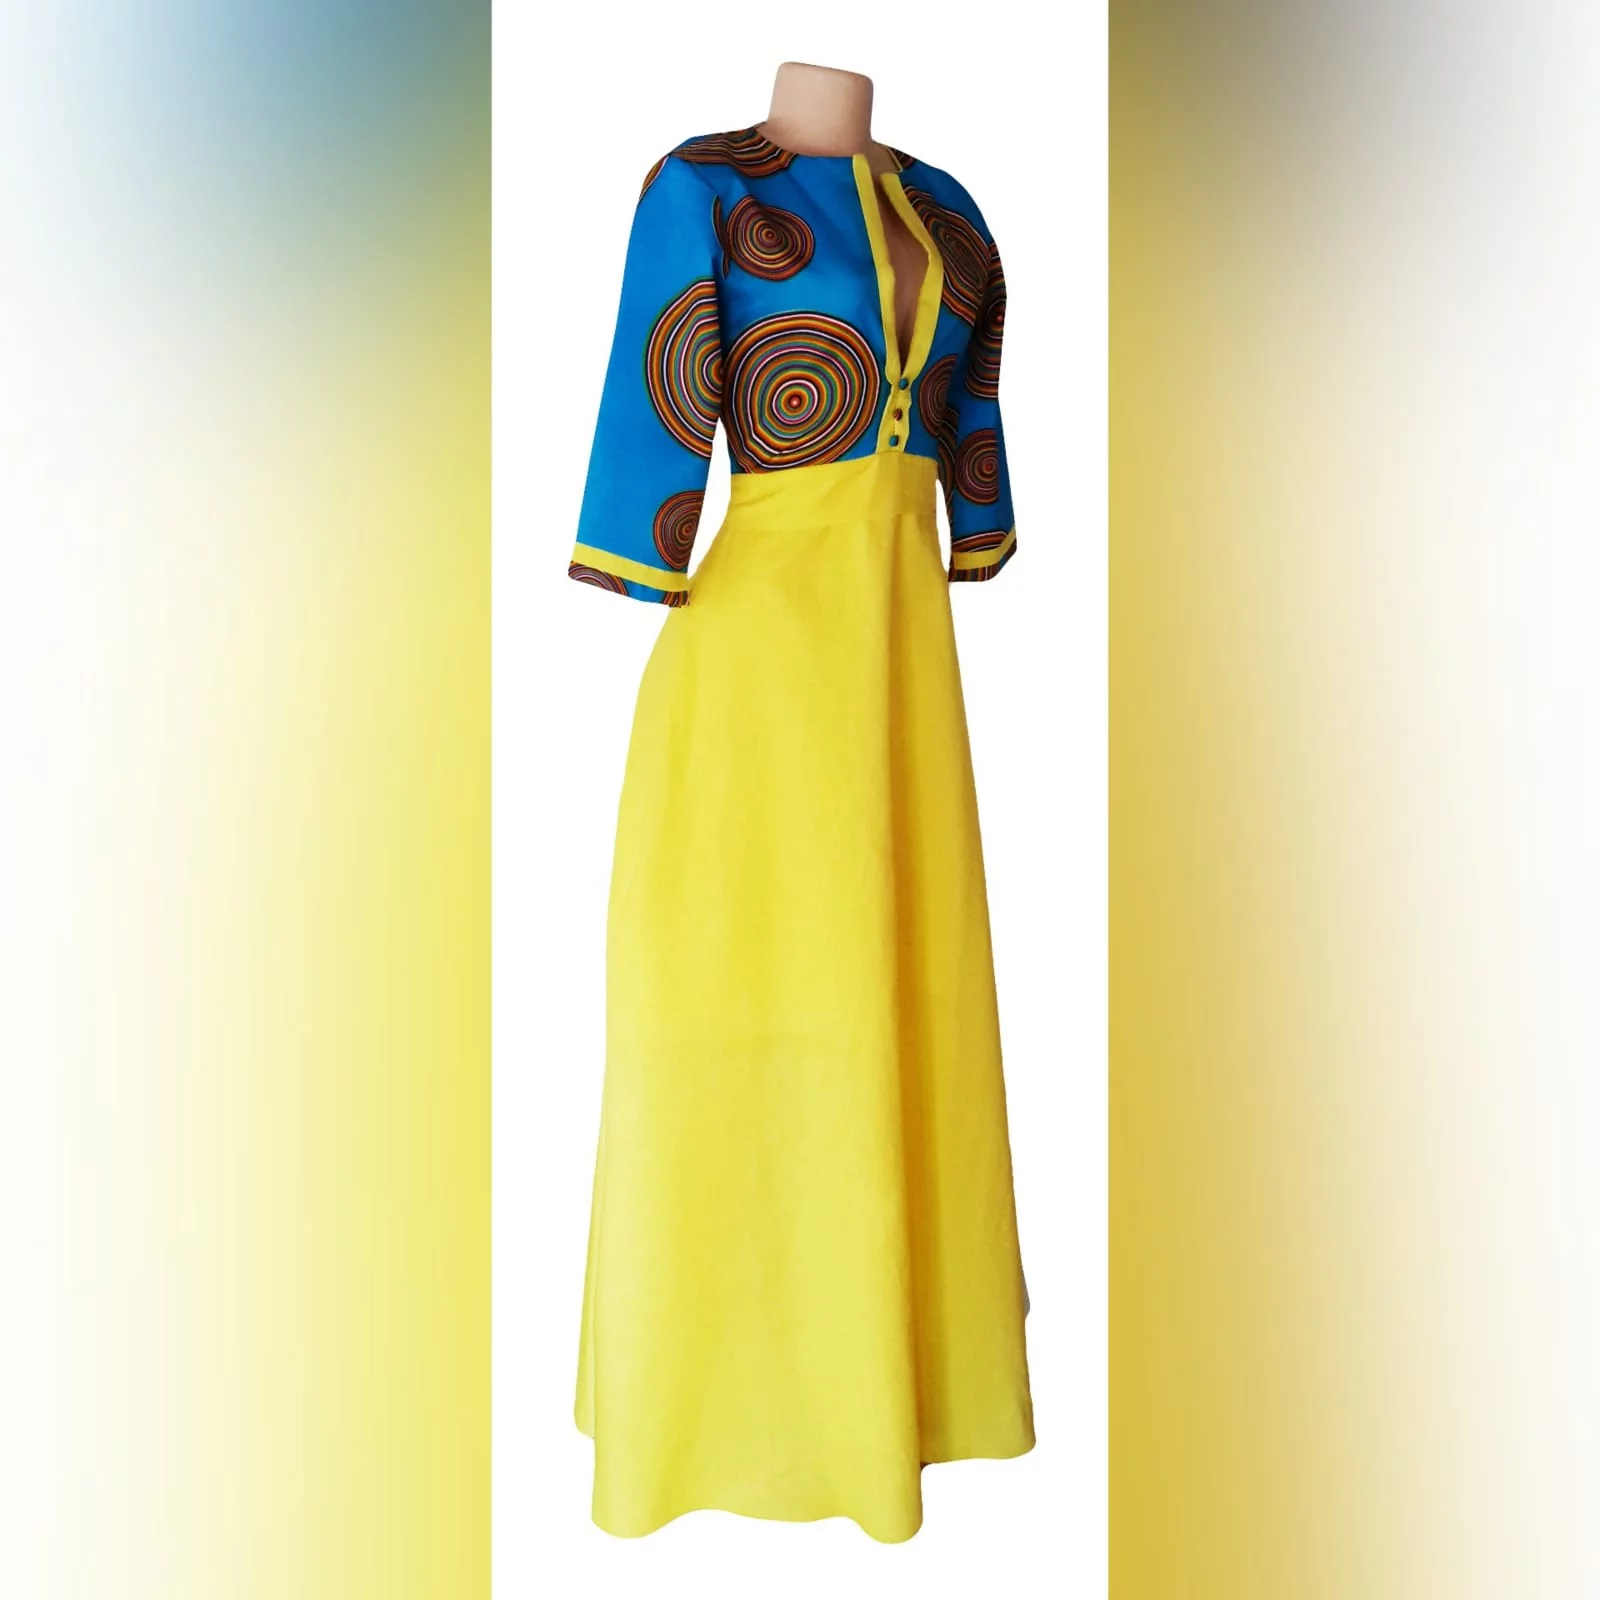 Blue & yellow modern traditional dress 9 modern traditional blue and yellow empire fit dress. Flowy bottom, neckline with a slit.